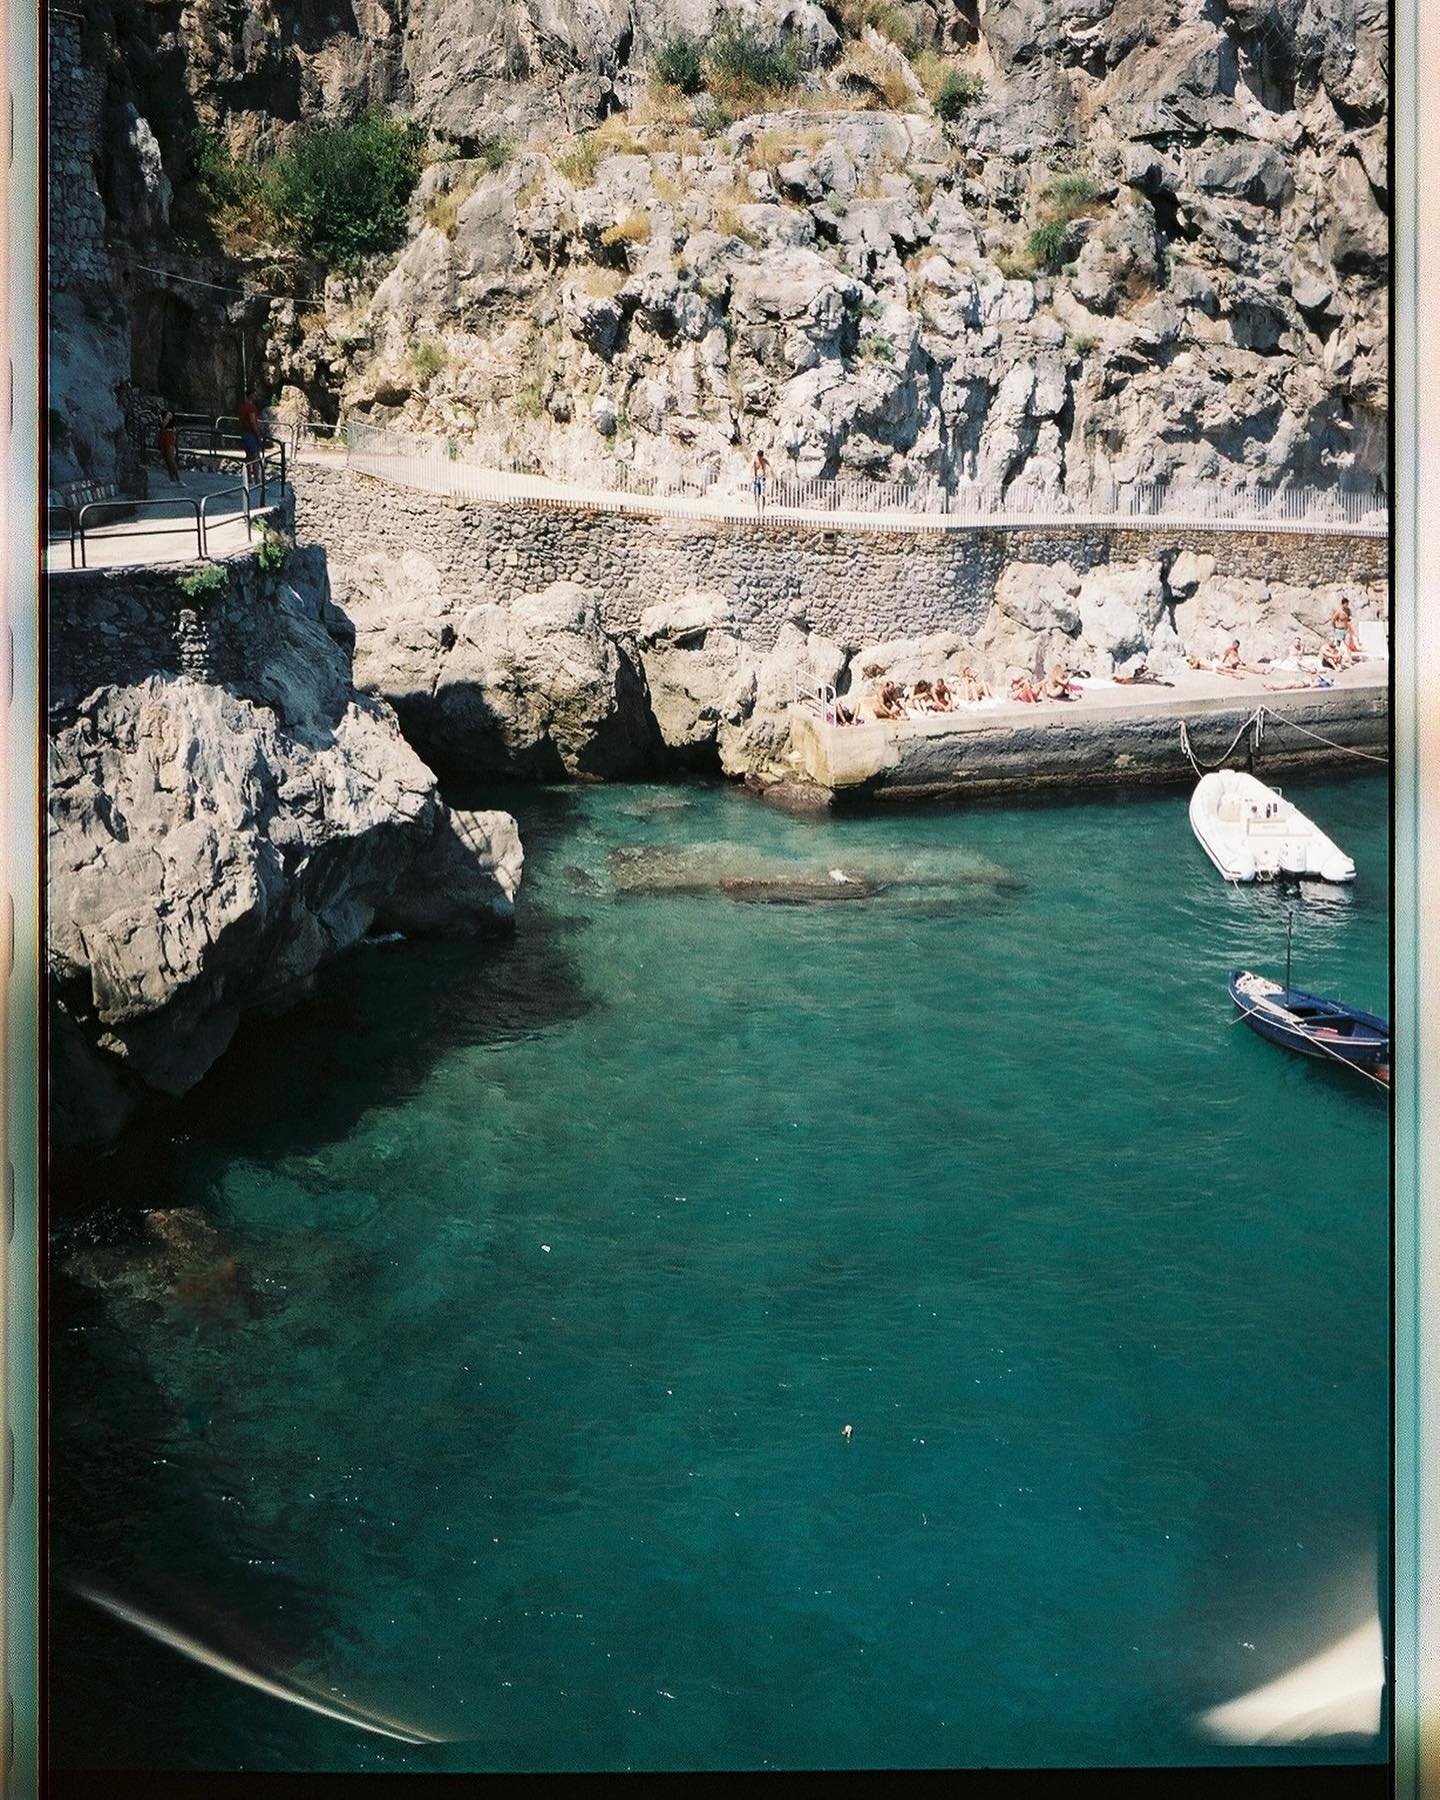 Sun Drenched Turquoise Expanses 
Marina di Praia, Amalfi Coast
July 2022

.
.
.
.
.
.

#kodakmoments #film# #35mm #madewithkodak #filmphotography #onfilm #filmforever #kodakmoments #film #daily35mm #35mm #madewithkodak #kodakportra400 #filmcommunity 